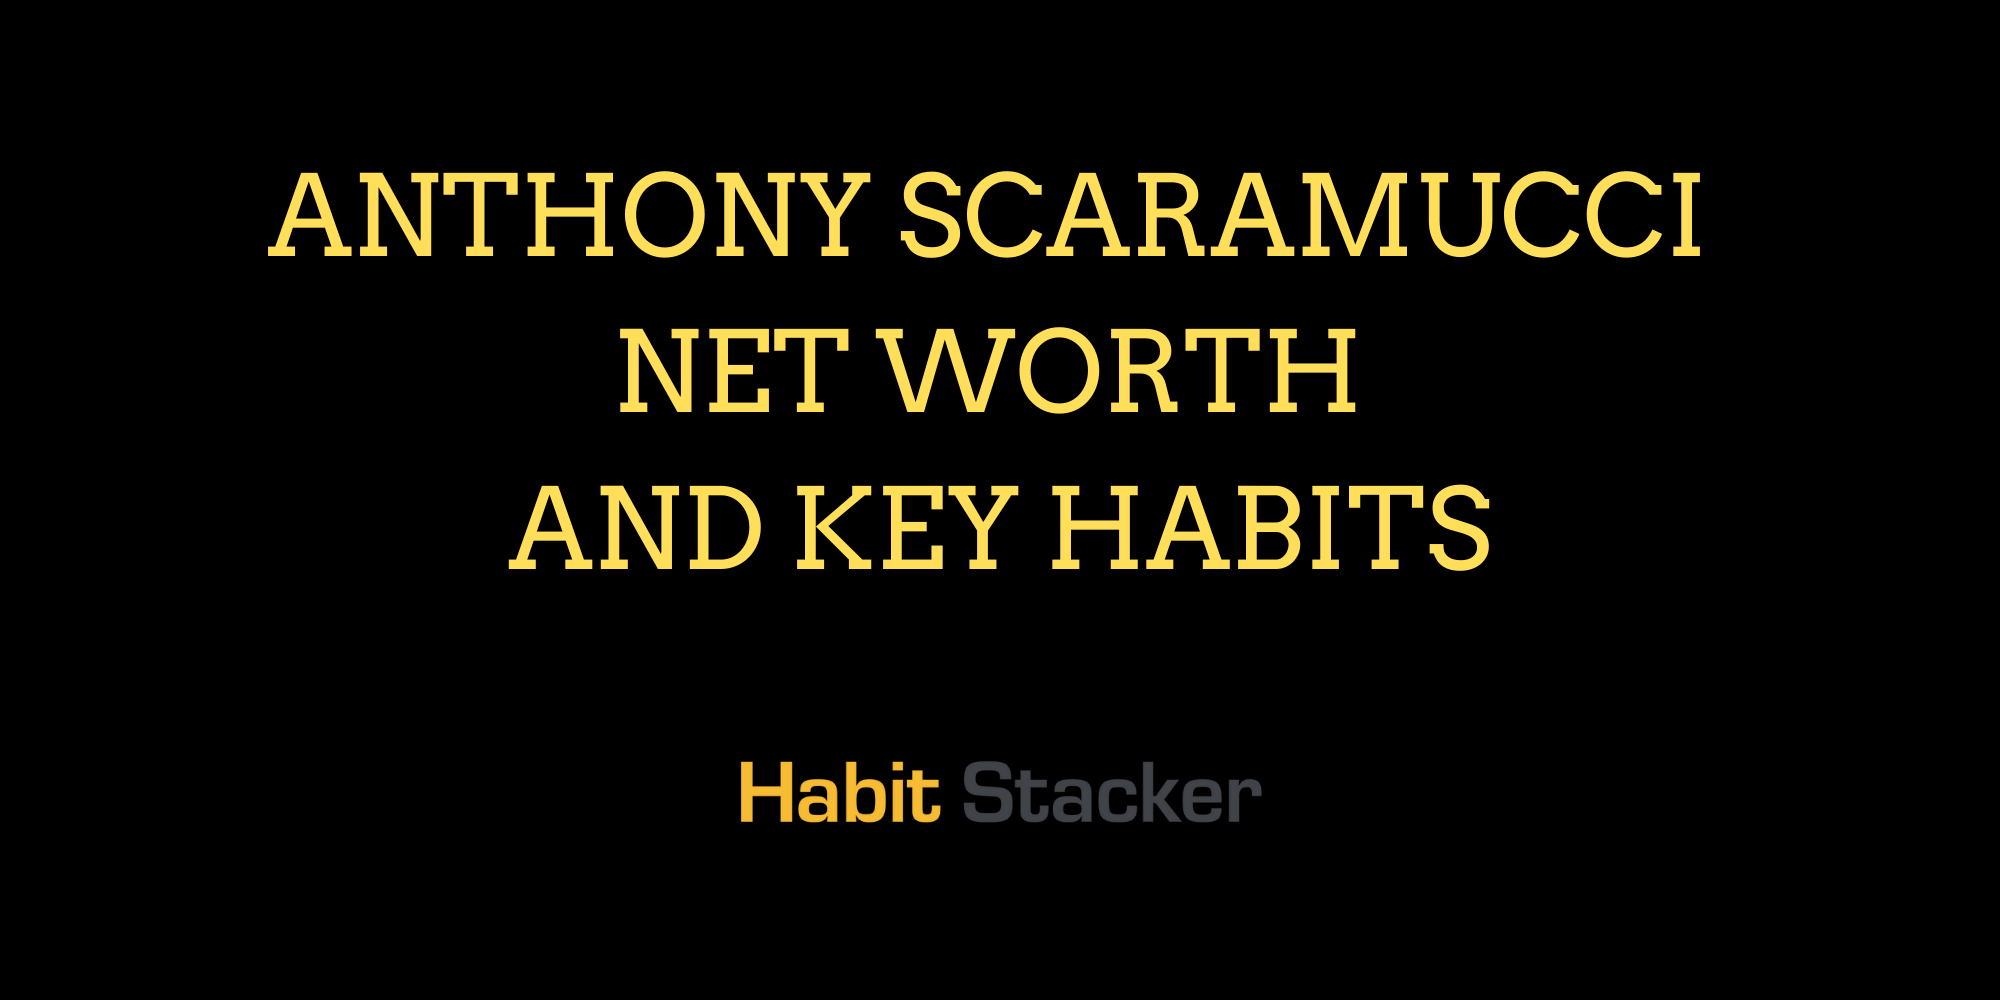 Anthony Scaramucci Net Worth and Key Habits